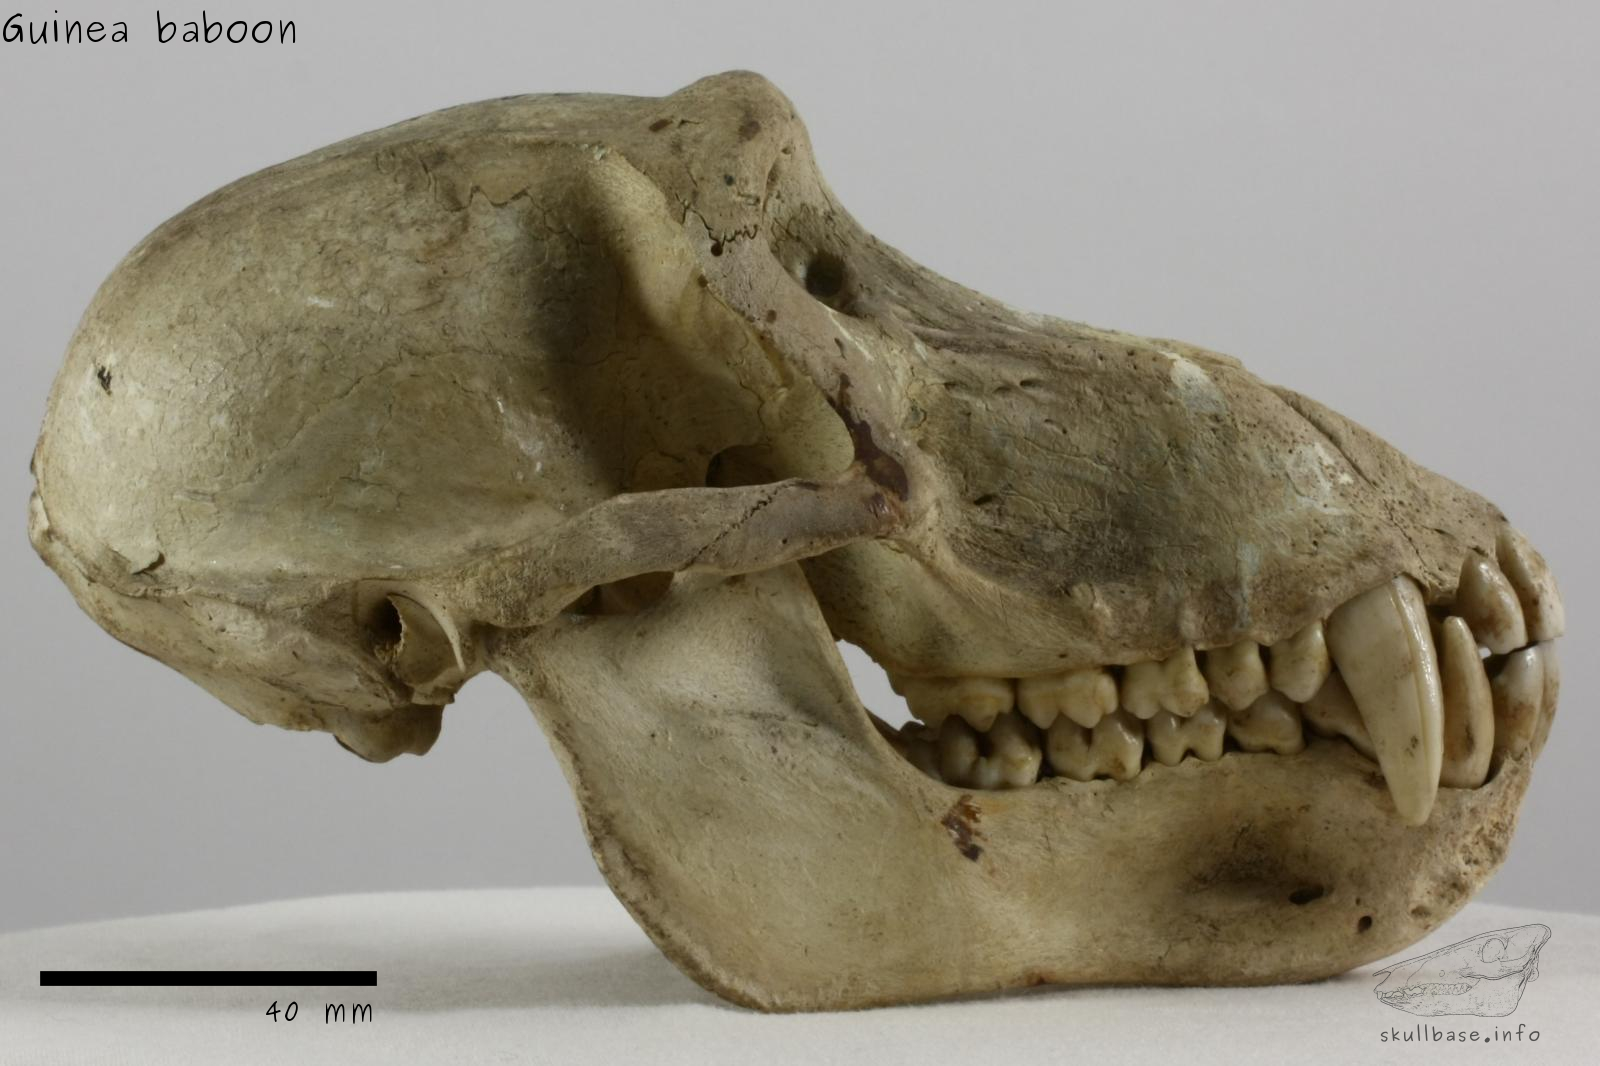 Guinea baboon (Papio papio) skull lateral view